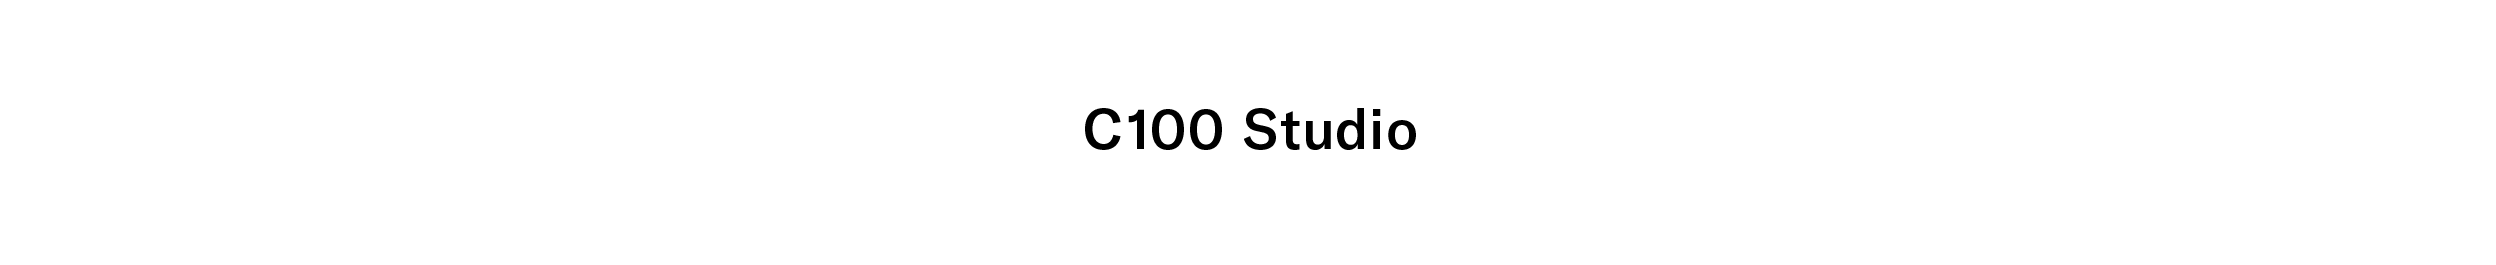 C100 Studio's profile banner